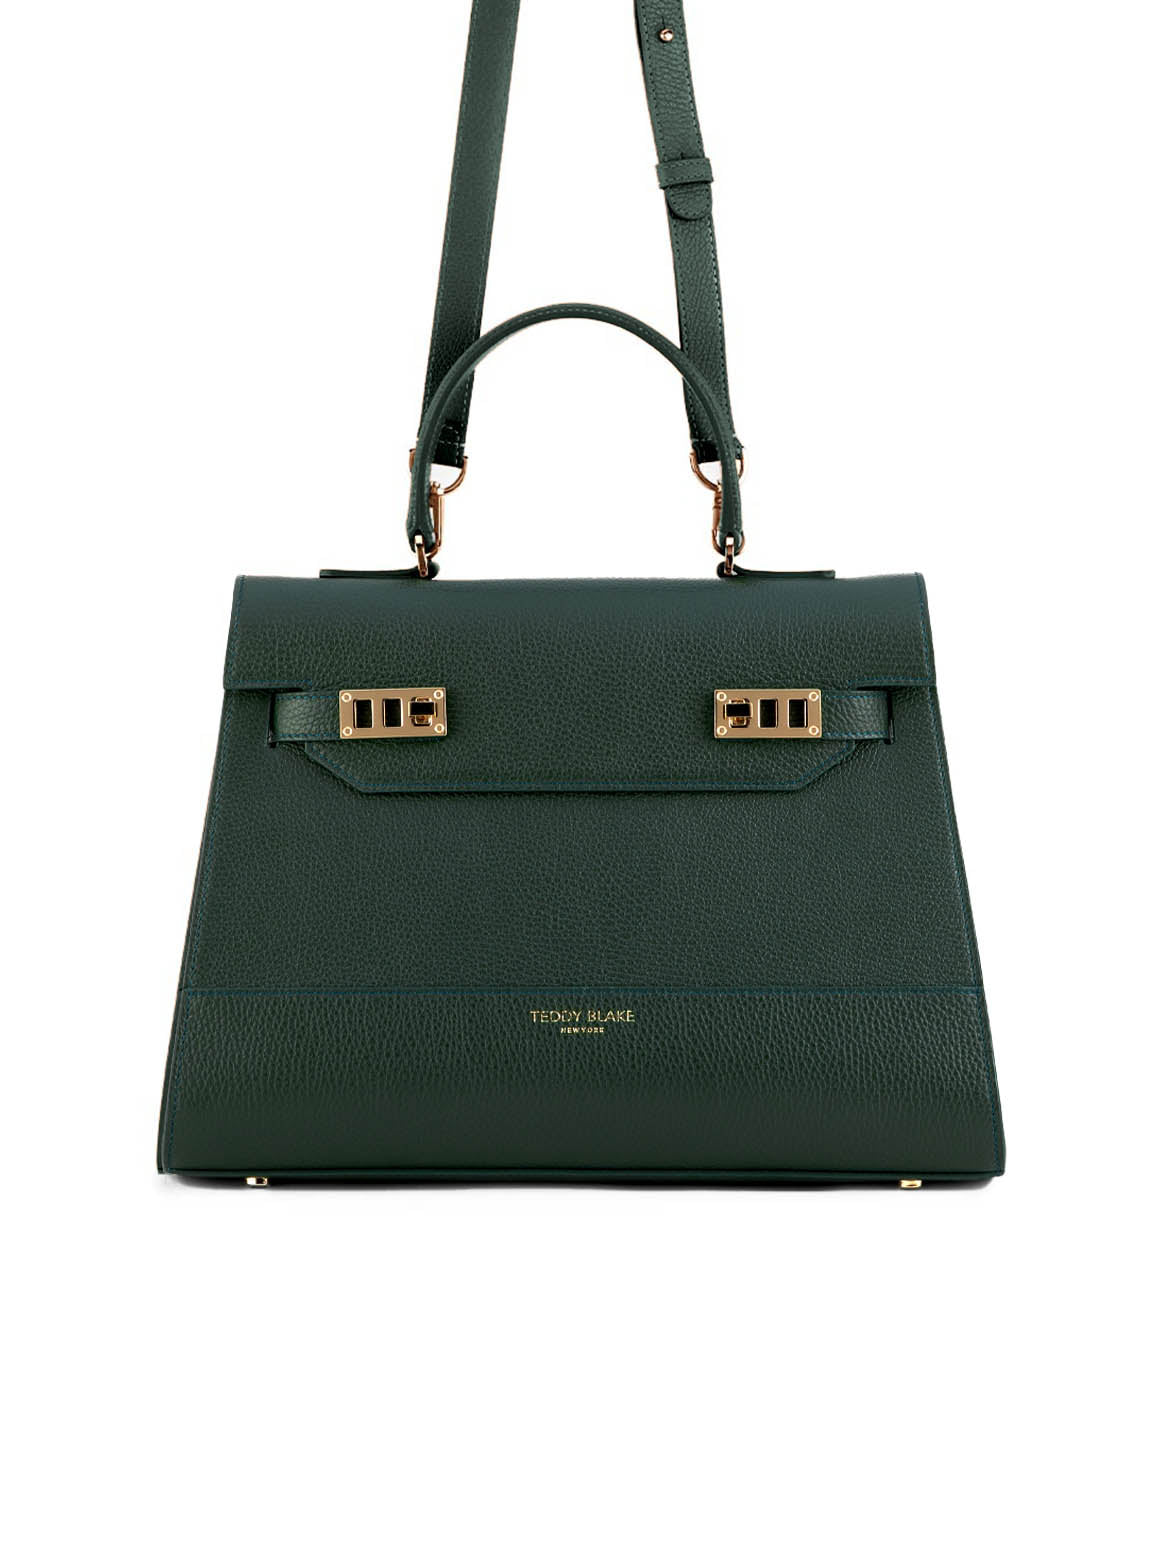 47 Hermes Birkin bags ideas  leather handbags women, genuine leather  handbag, leather handbags